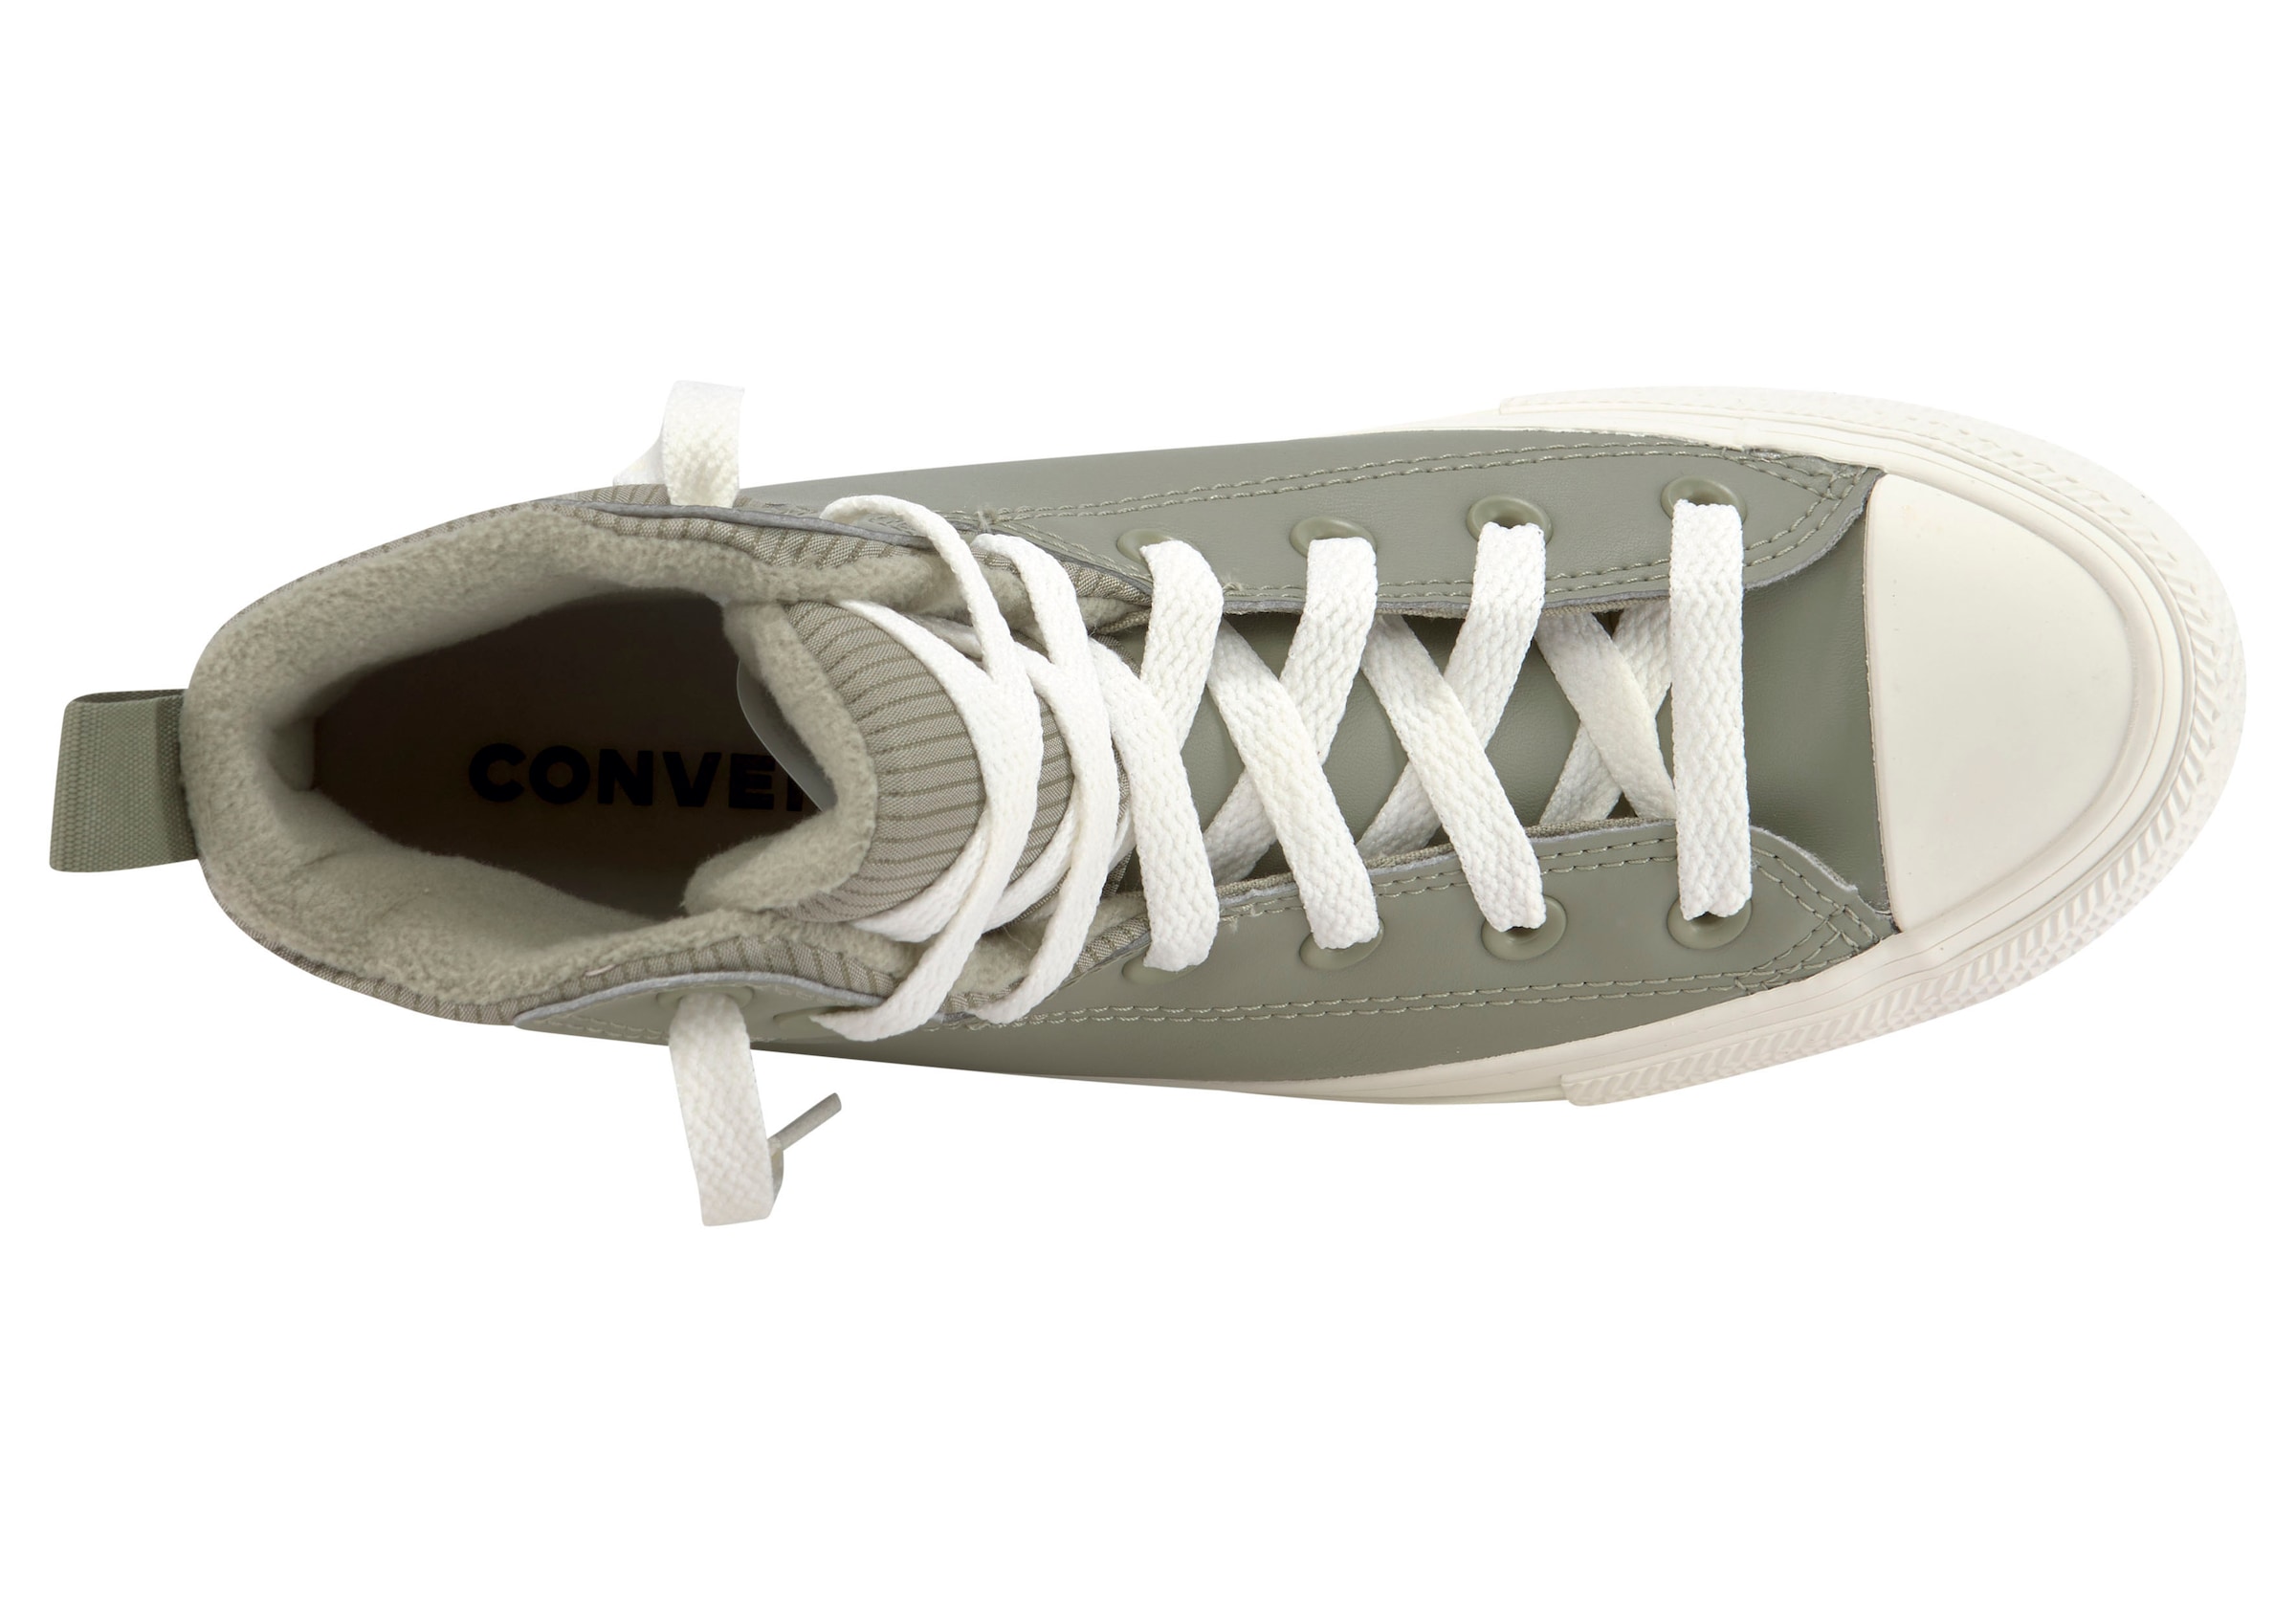 Converse Sneakerboots »CHUCK TAYLOR ALL STAR BERKSHIRE BOOT«, Warmfutter